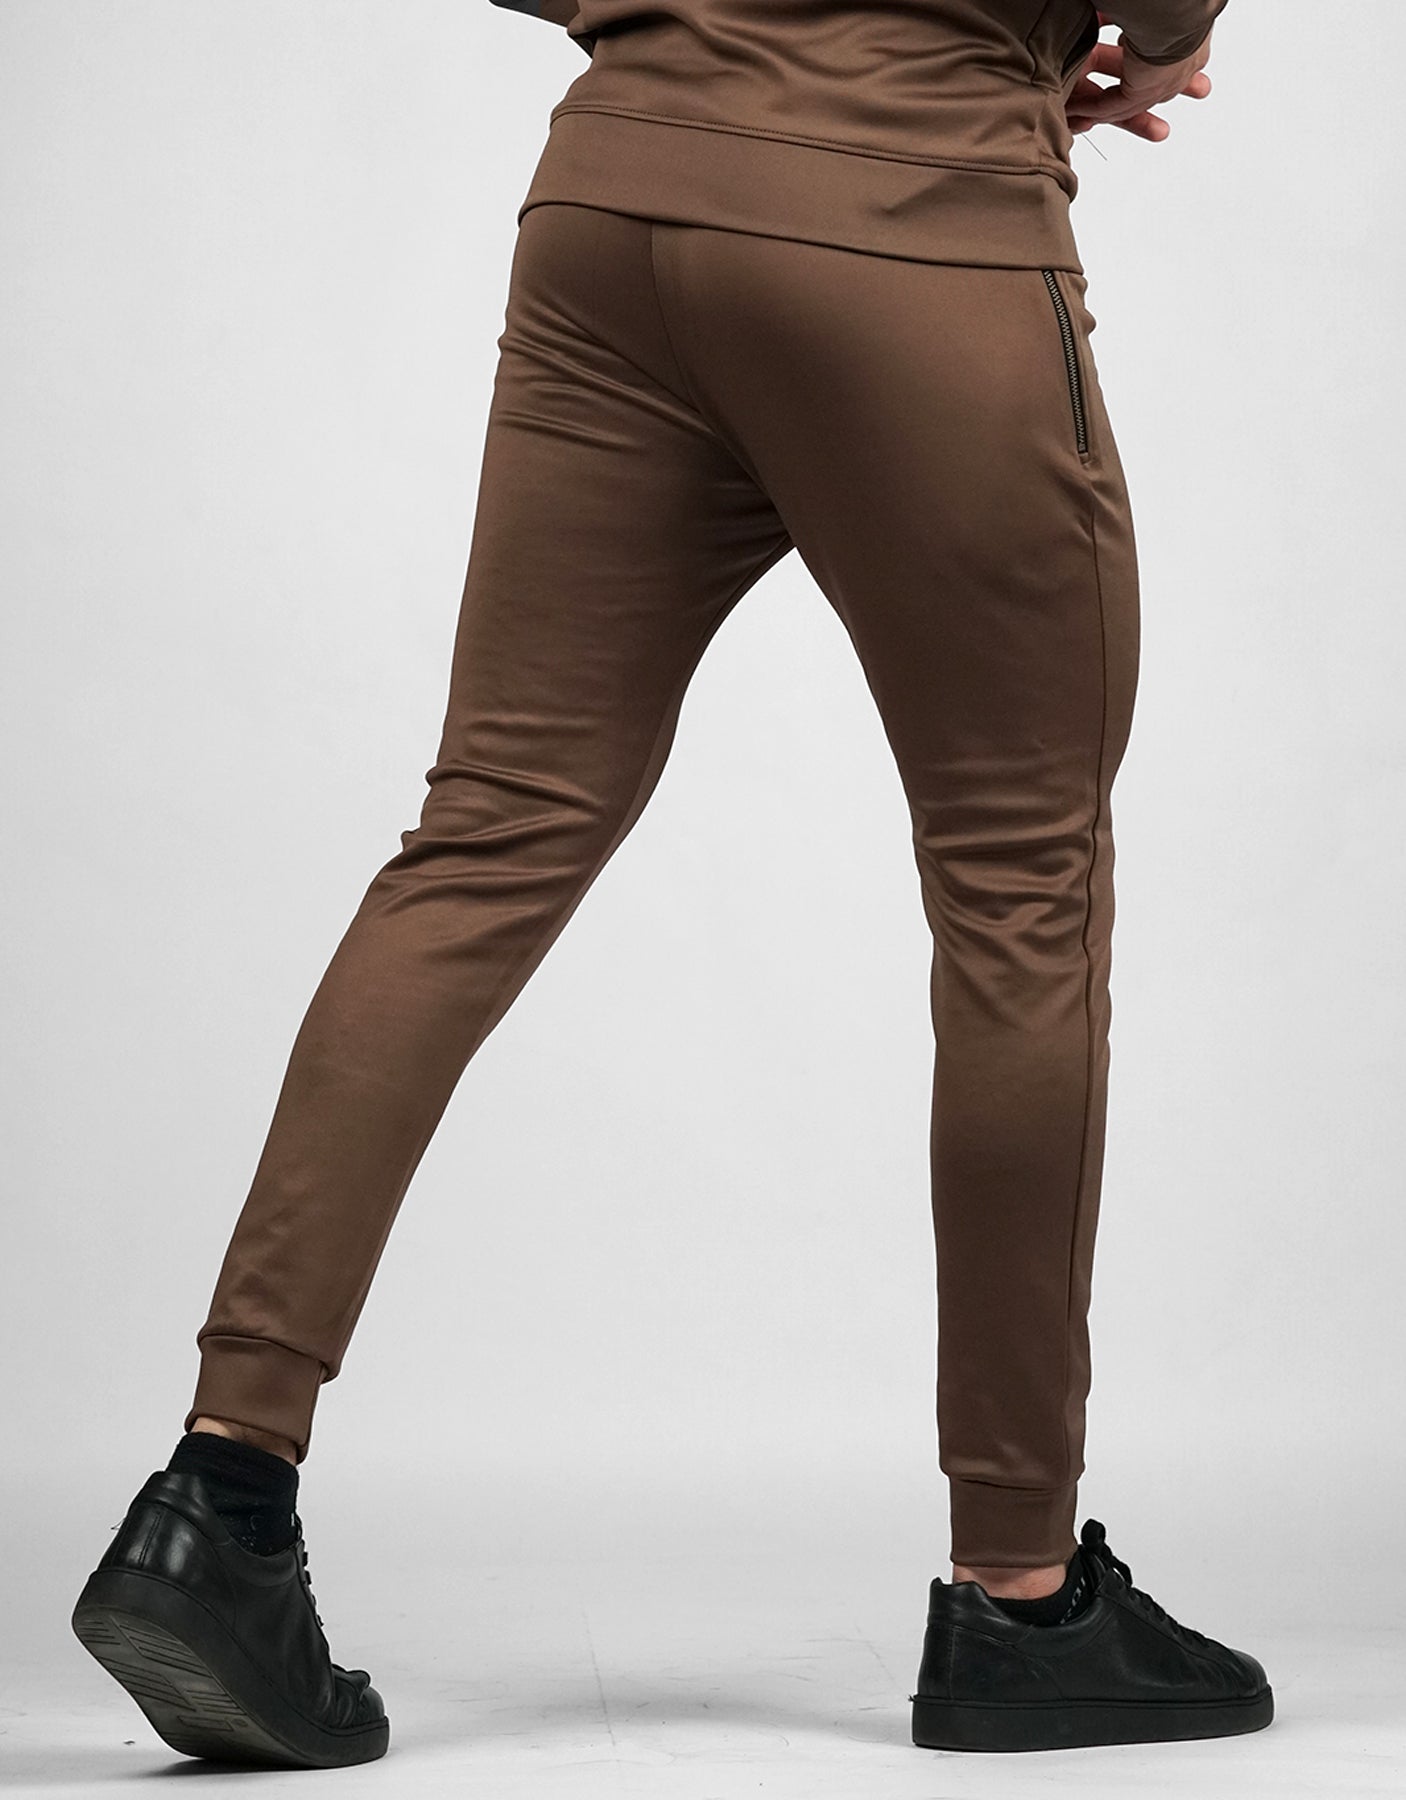 Opulence Jogger Pant 3.0 - Brown-Bodybrics-Men's Bottoms